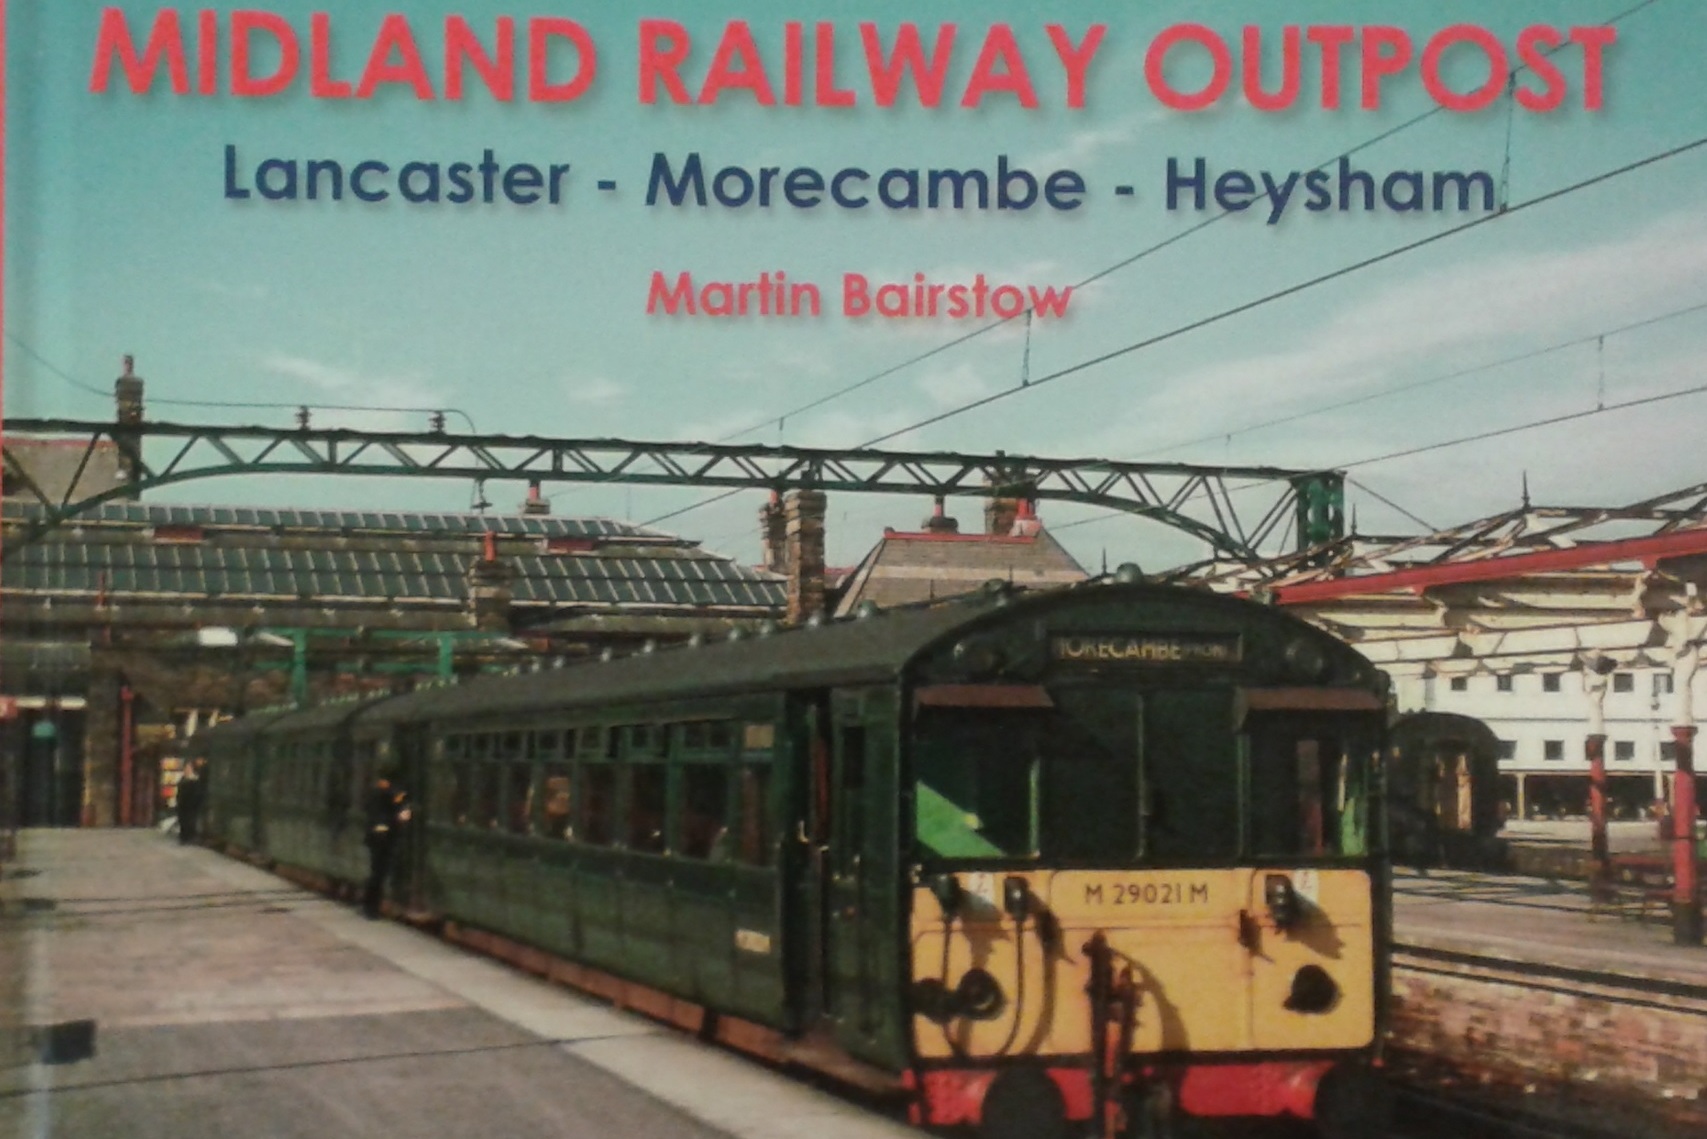 Rare railway photos in new book: Midland Railway Outpost – Lancaster-Morecambe-Heysham